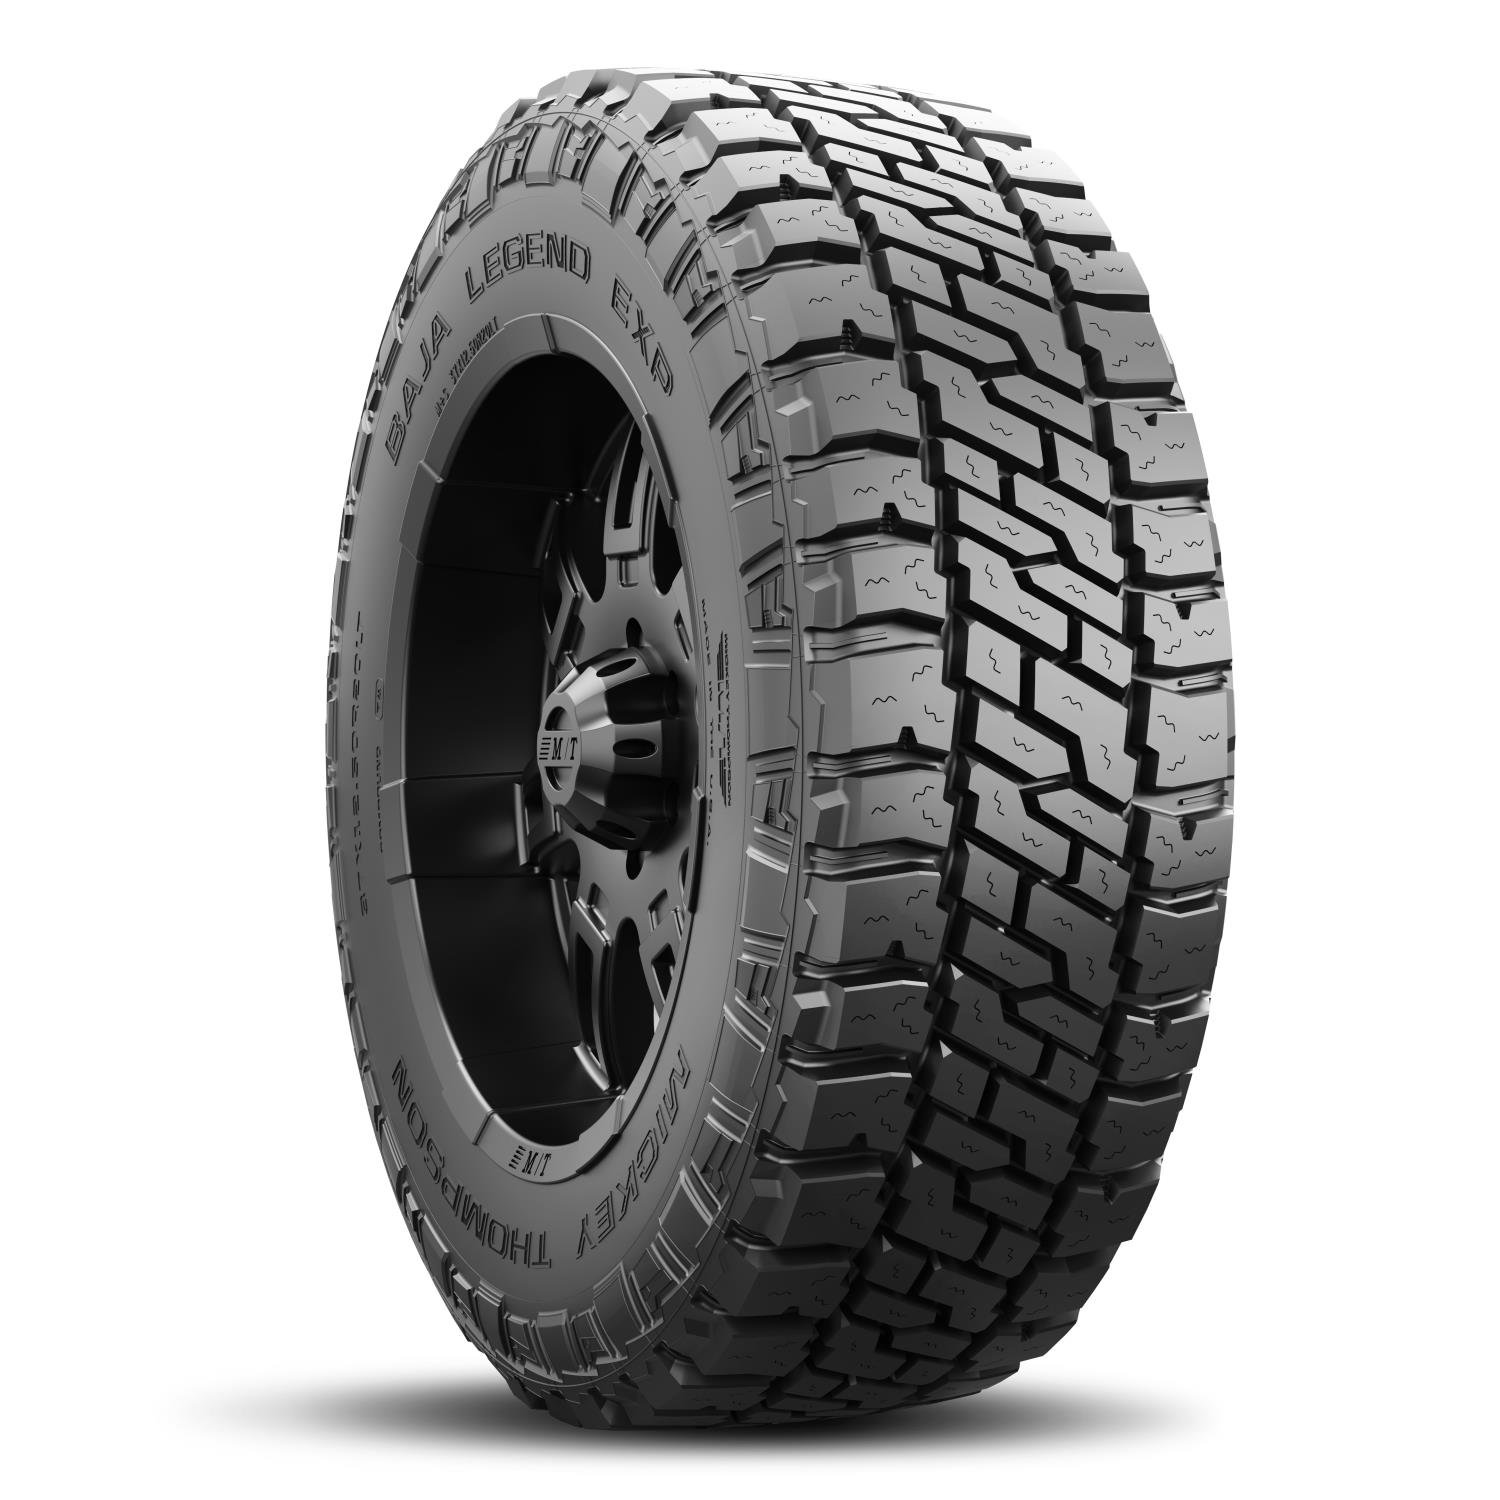 Baja Legend EXP Tire LT295/70R18